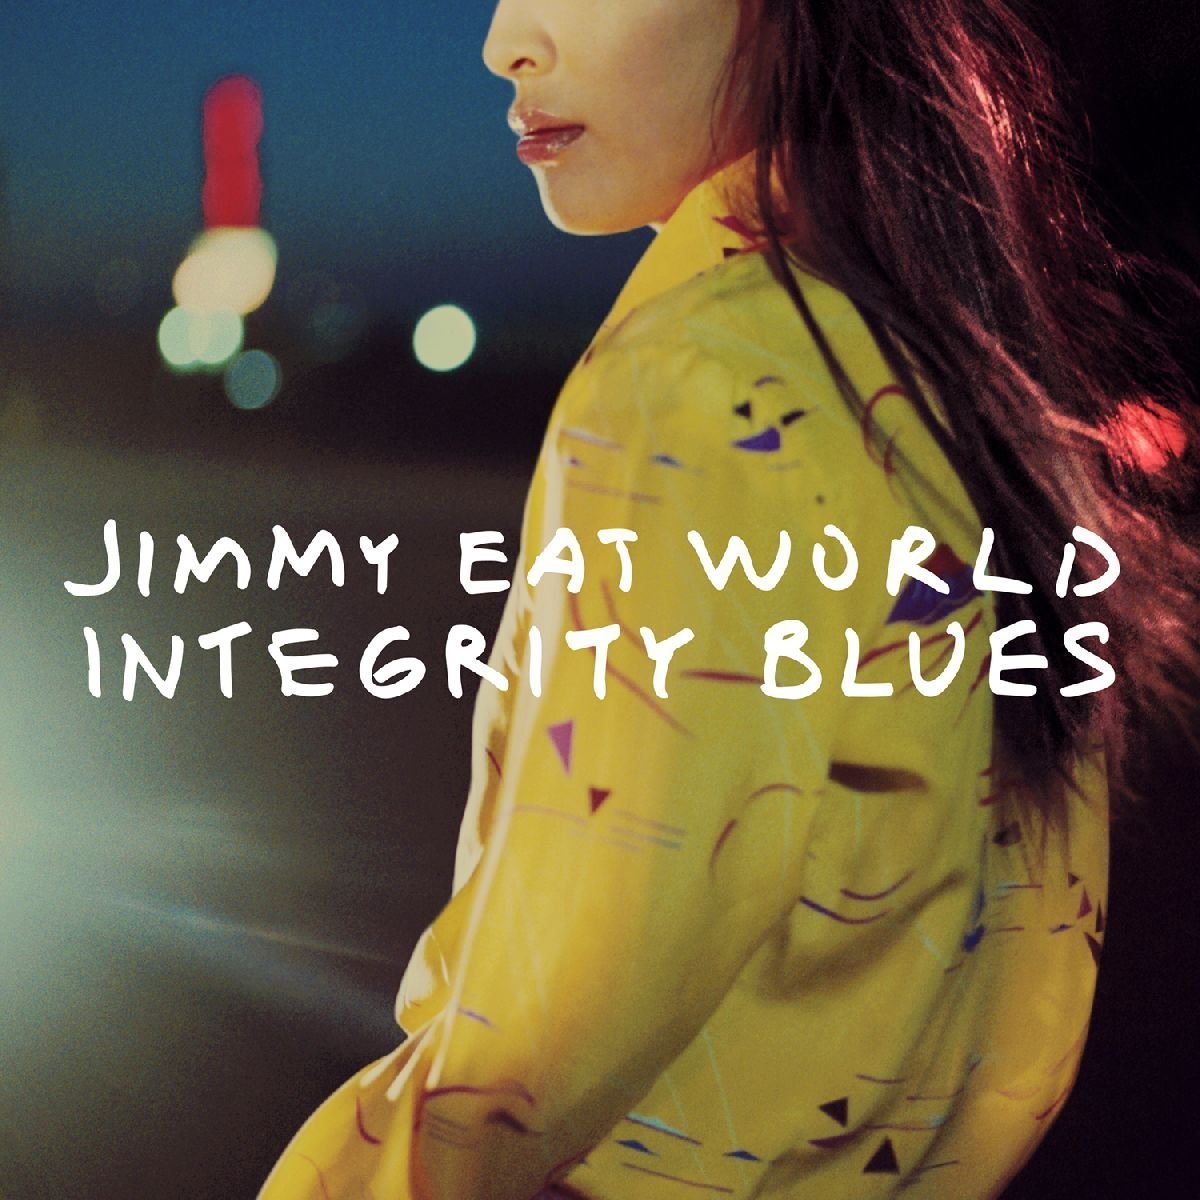 jimmy-eat-world-integrity-blues